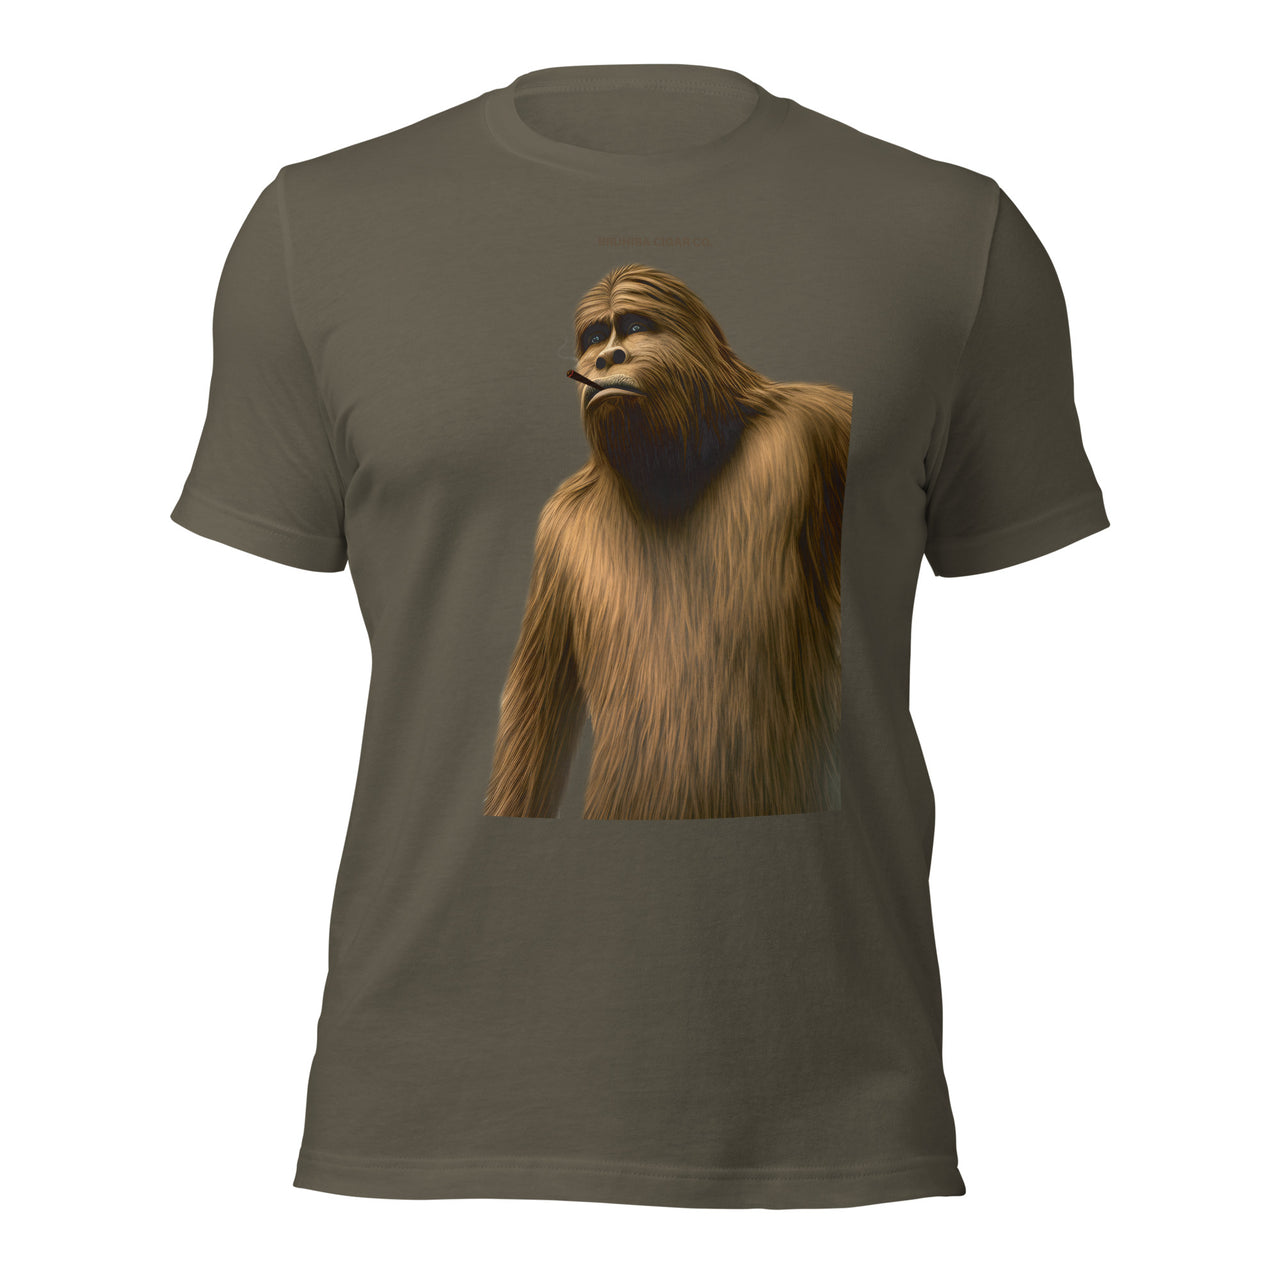 BRUHIBA "Bigfoot" Exclusive T-Shirt